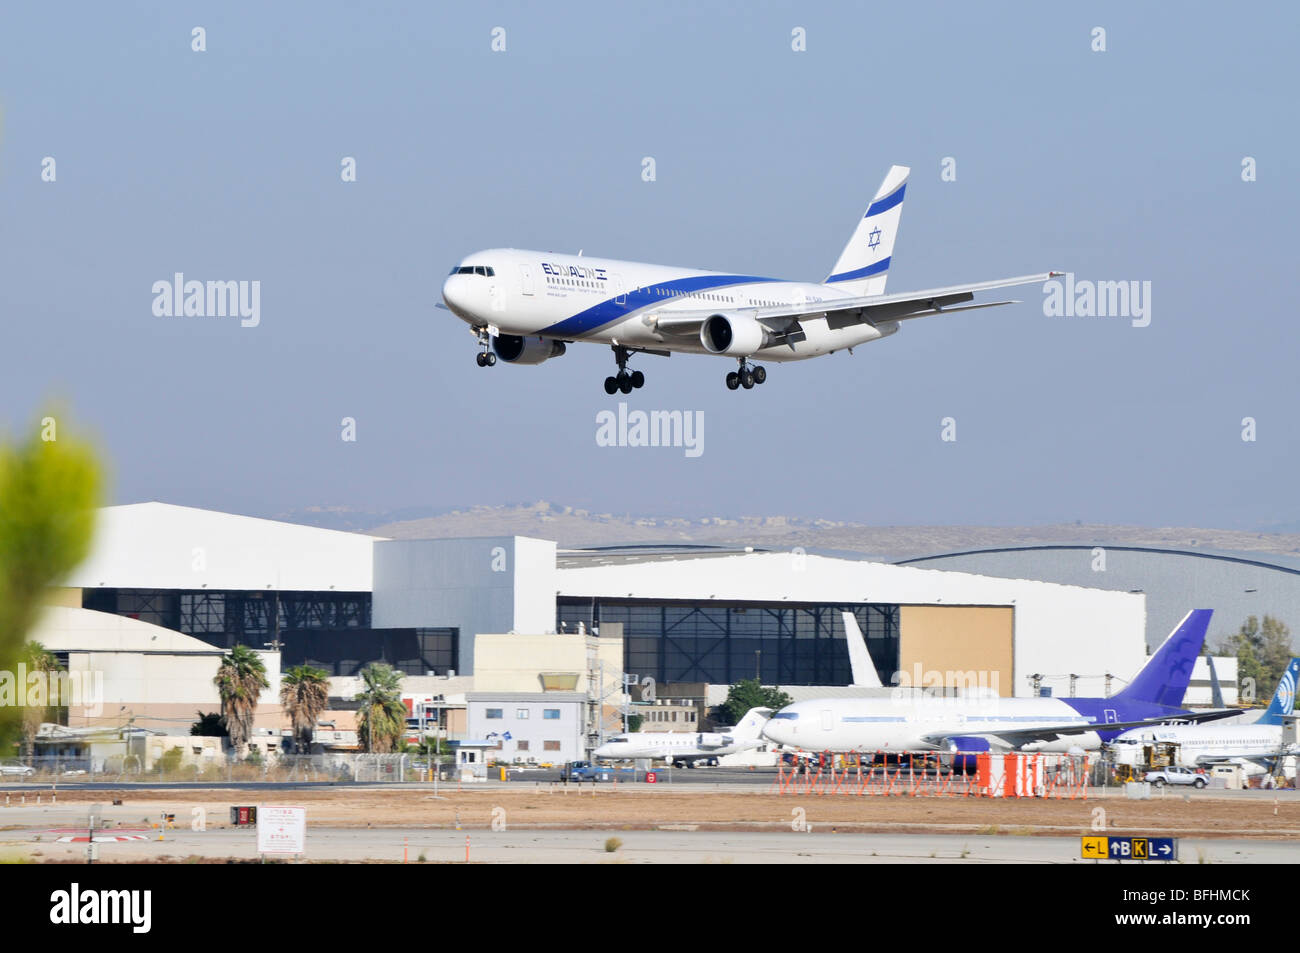 L'aéroport international Ben Gourion, Israël El Al 767-300 landing Banque D'Images